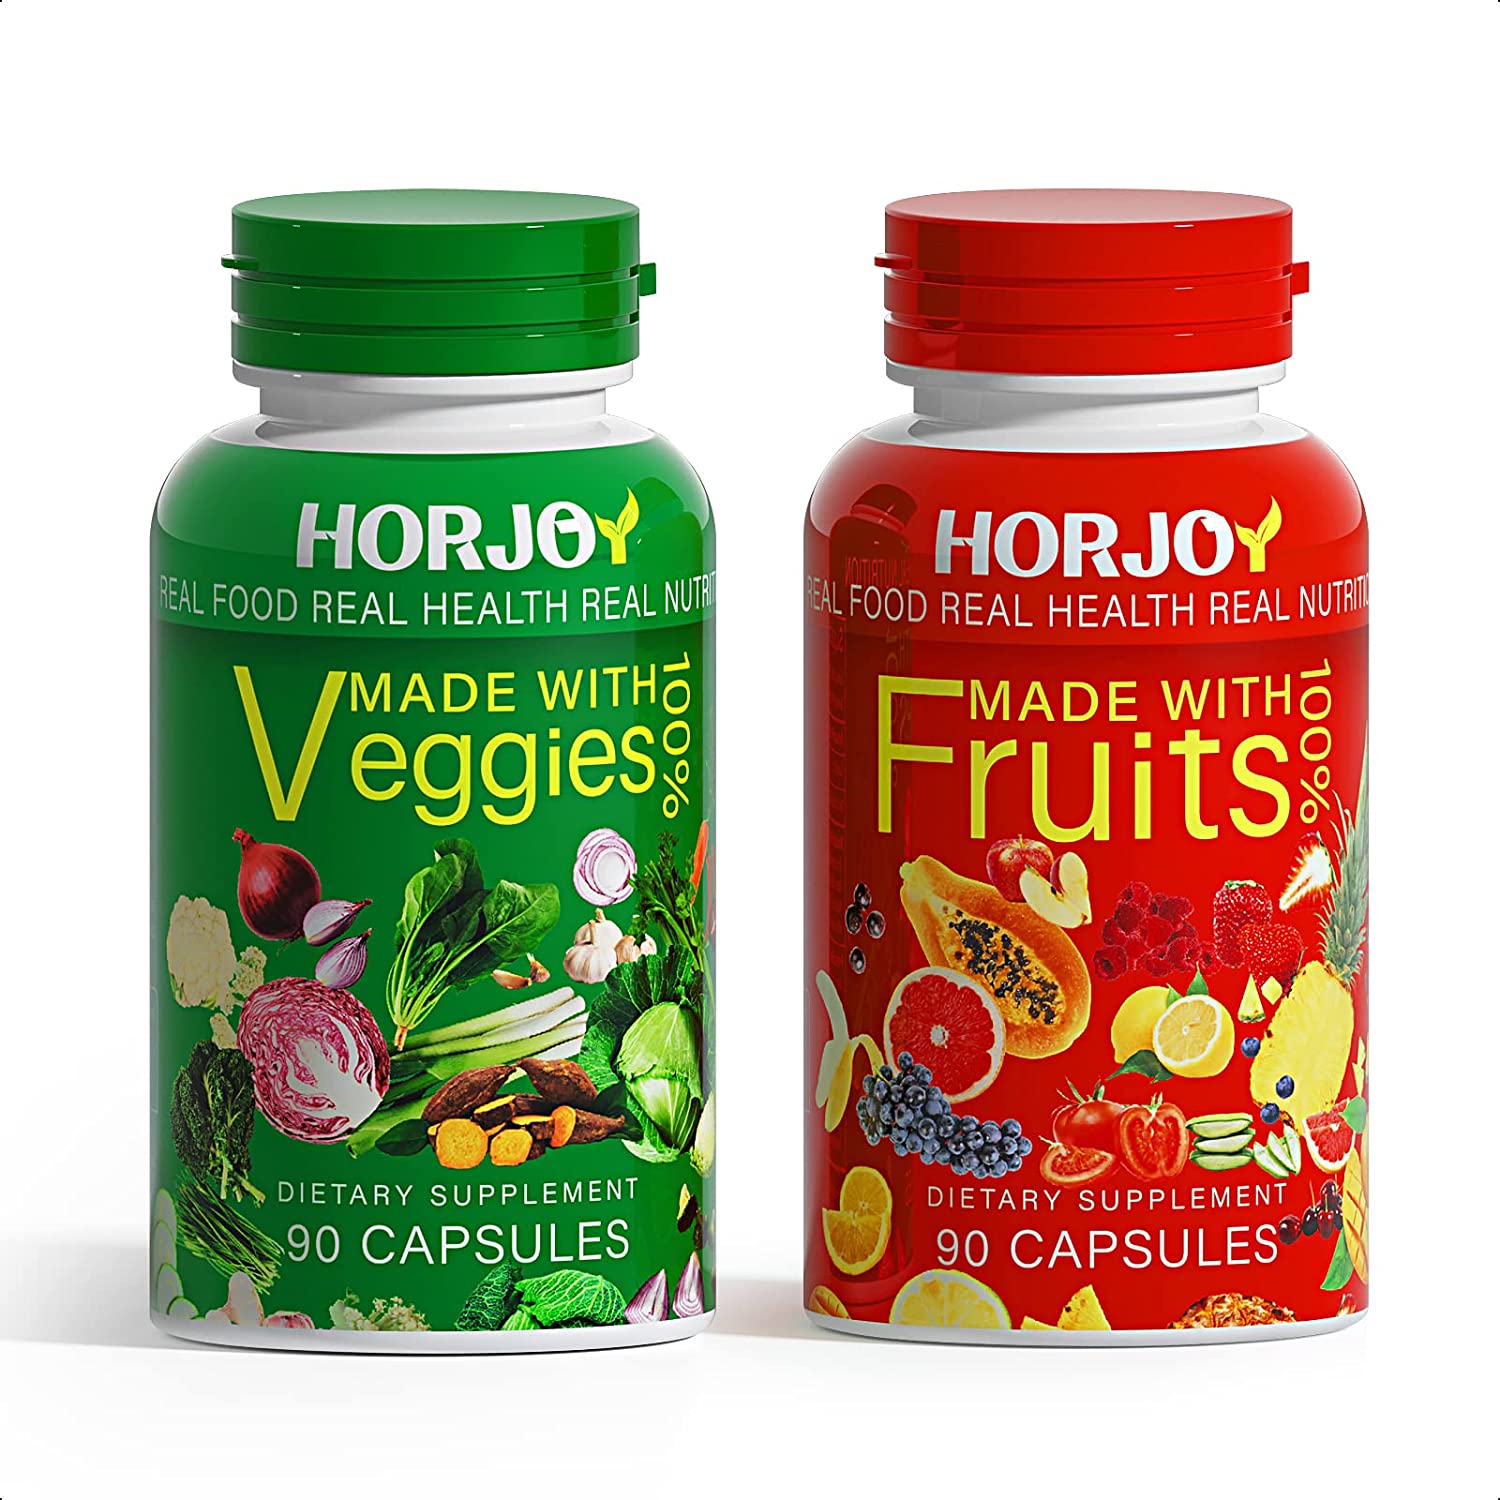 Horjoy Nature Fruits and Veggies/Vitamins Supplements